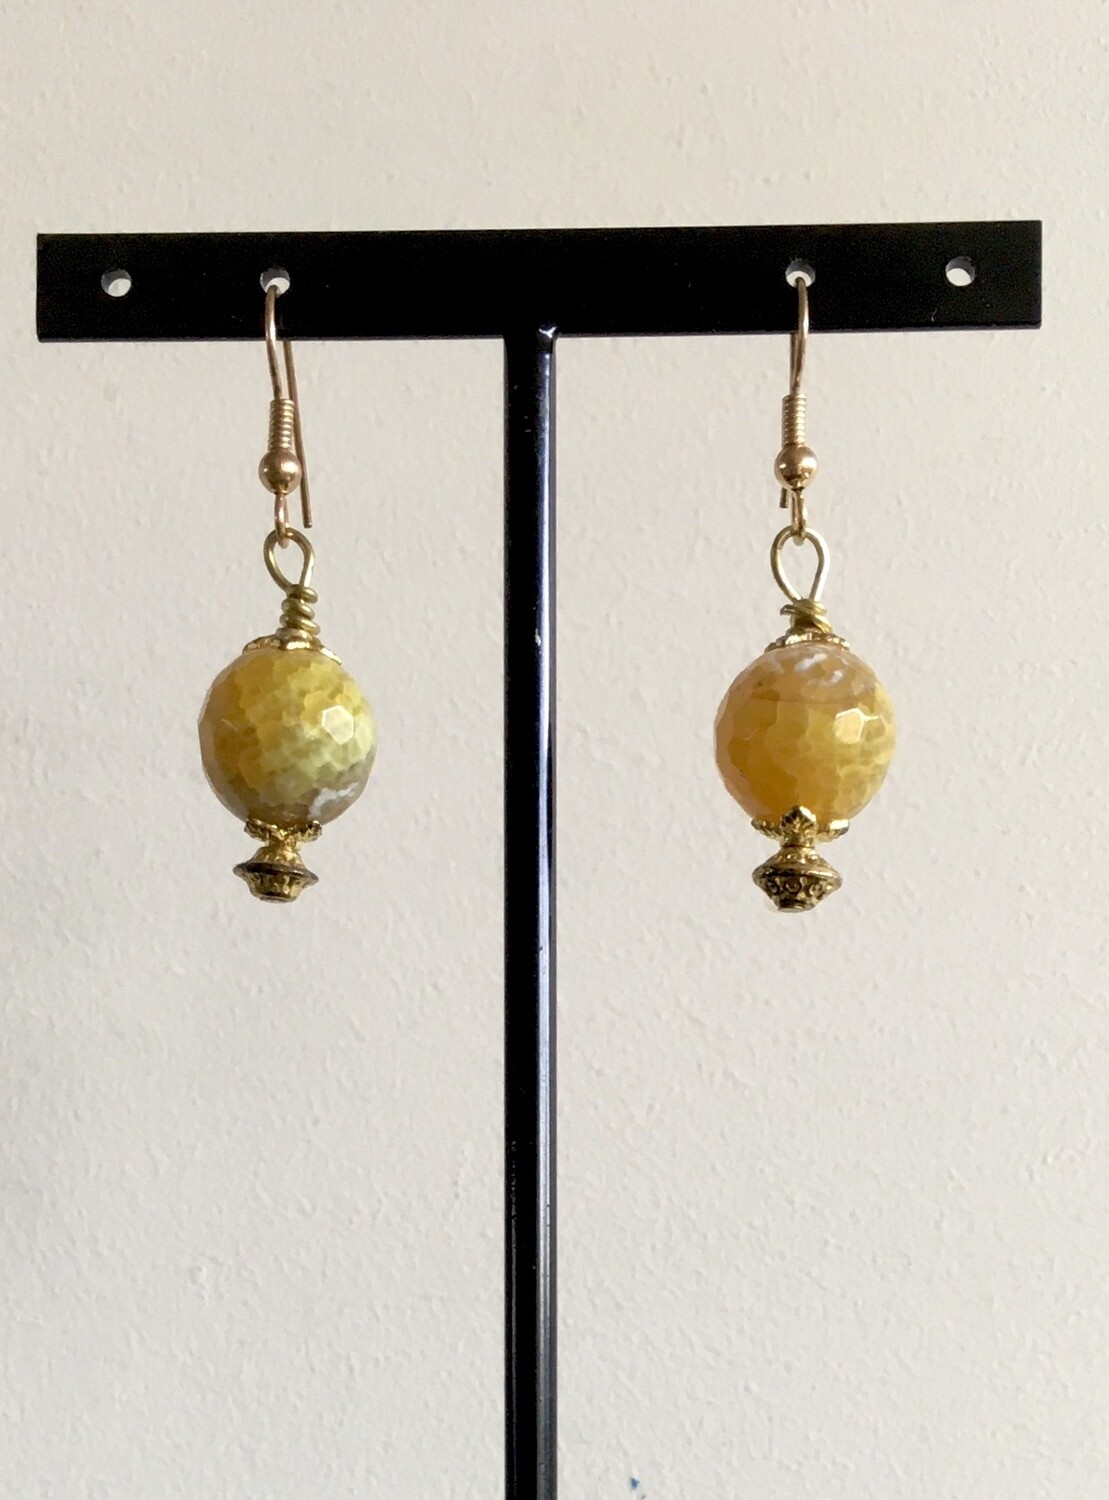 Yellow agate earrings